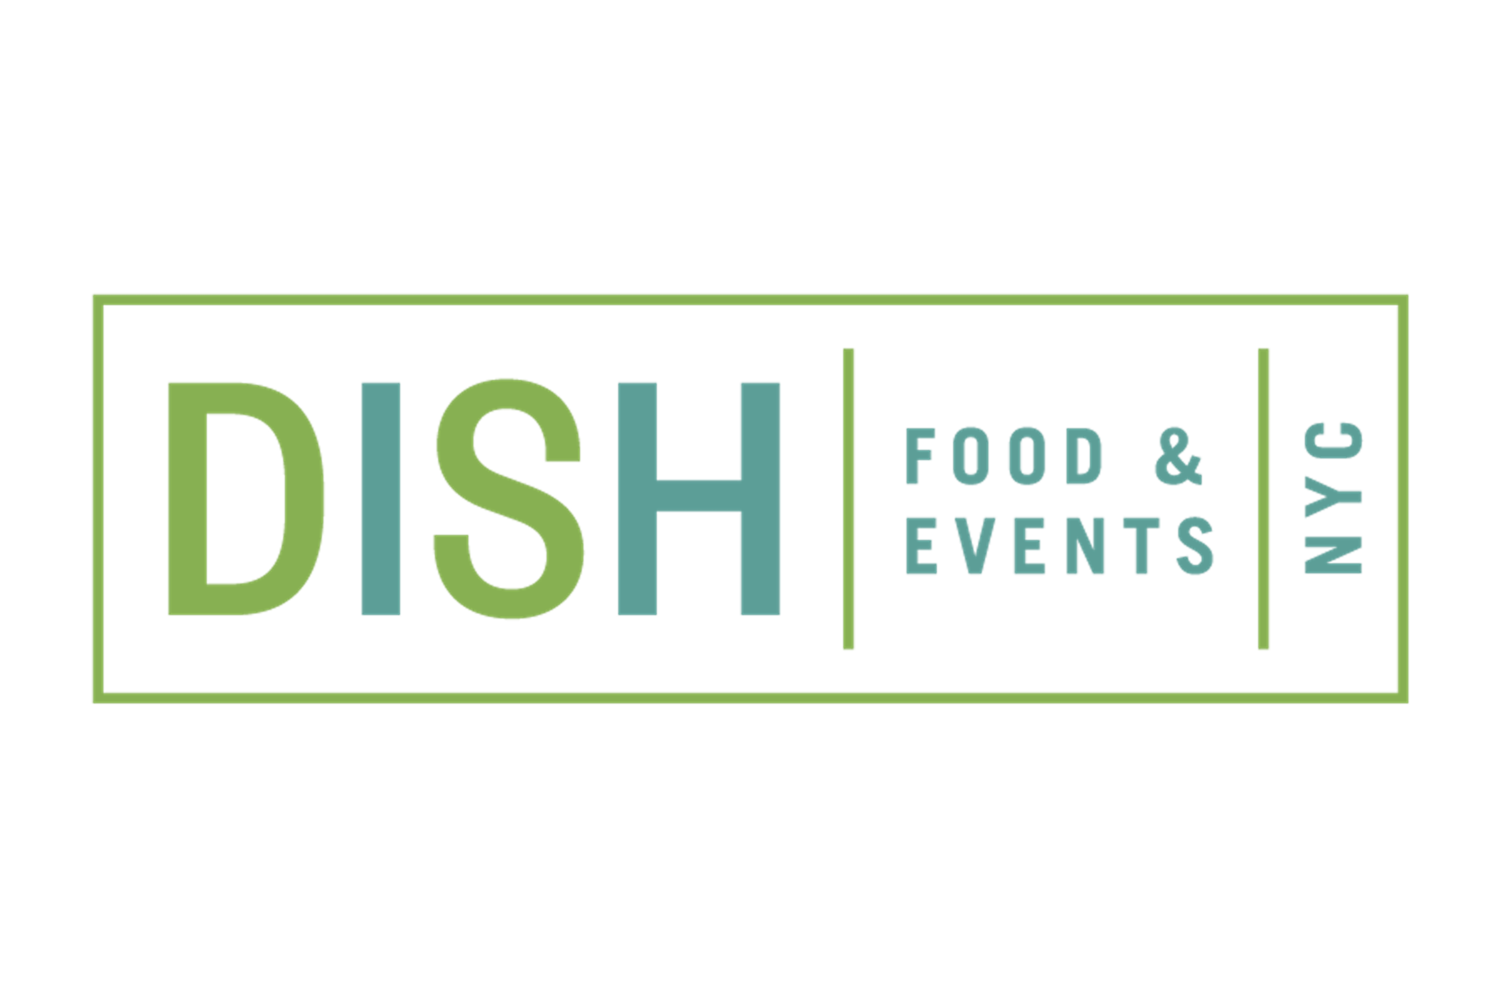 Dish Food & Events